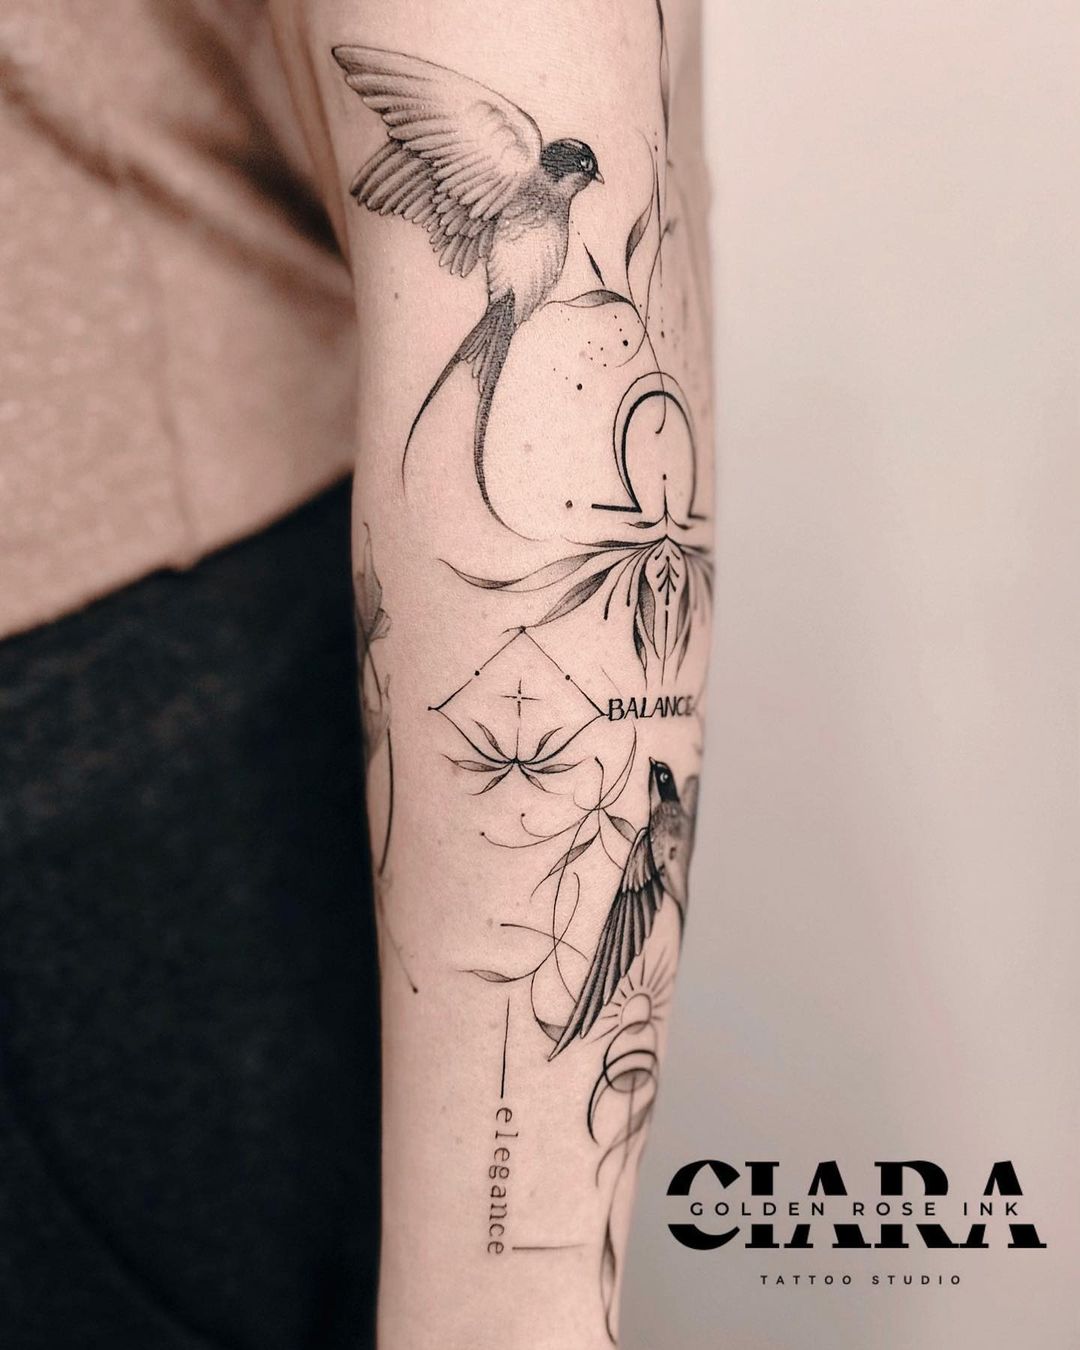 Libra tattoo designs